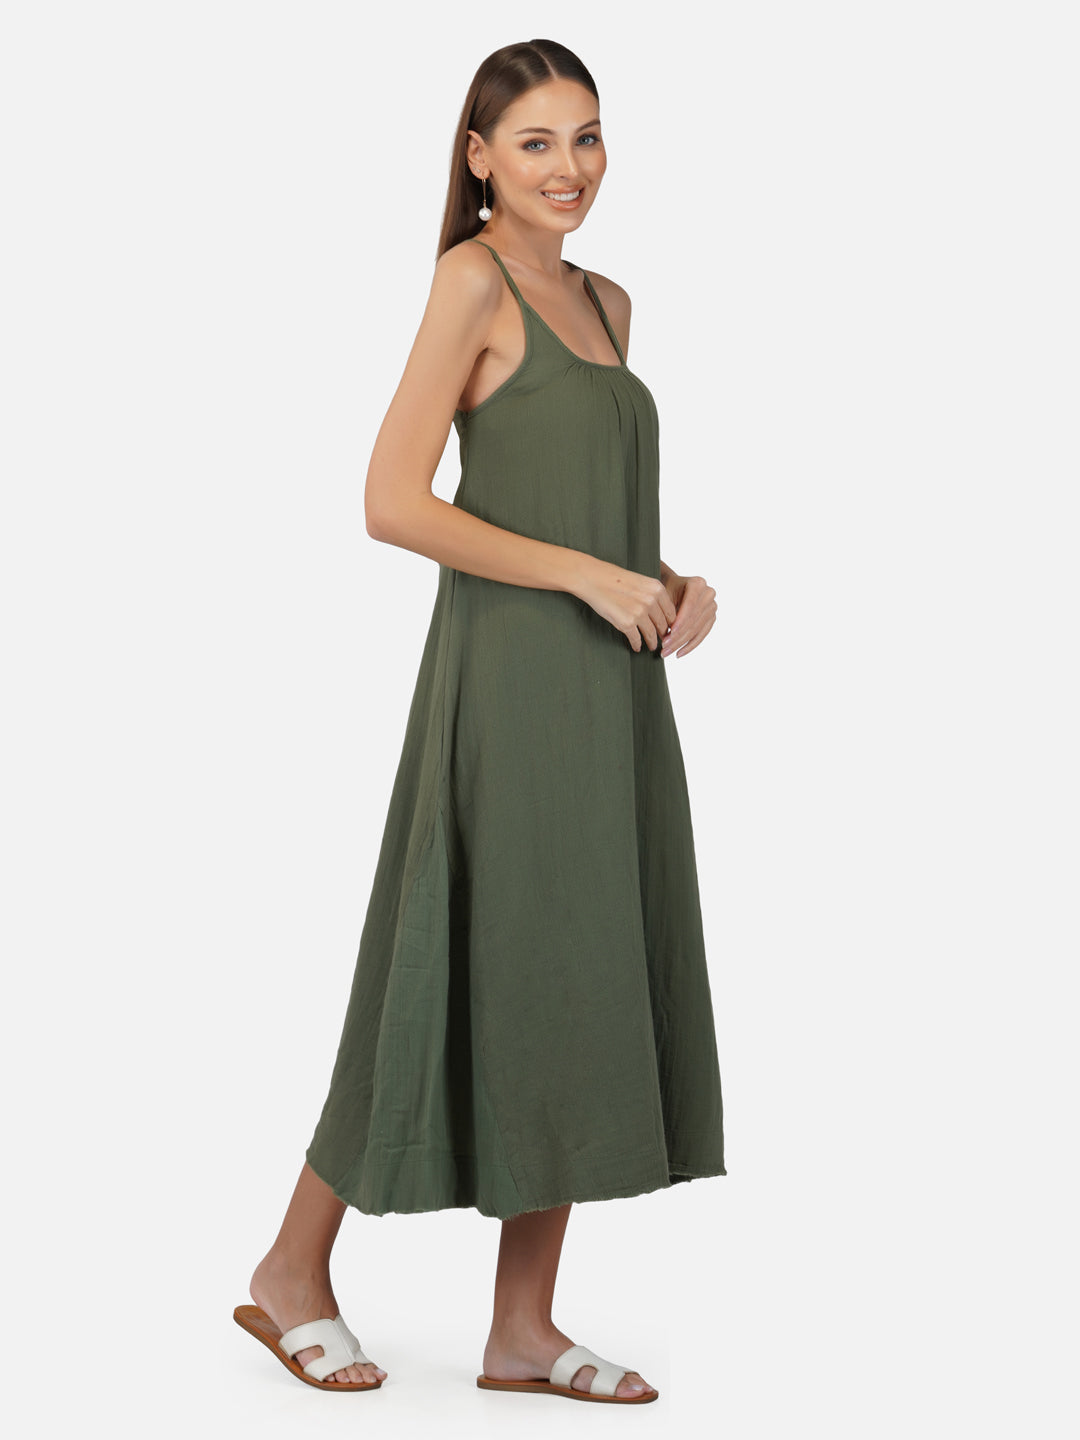 Porsorte Womens Cotton Gauze Olive Green Casual Strappy Dress